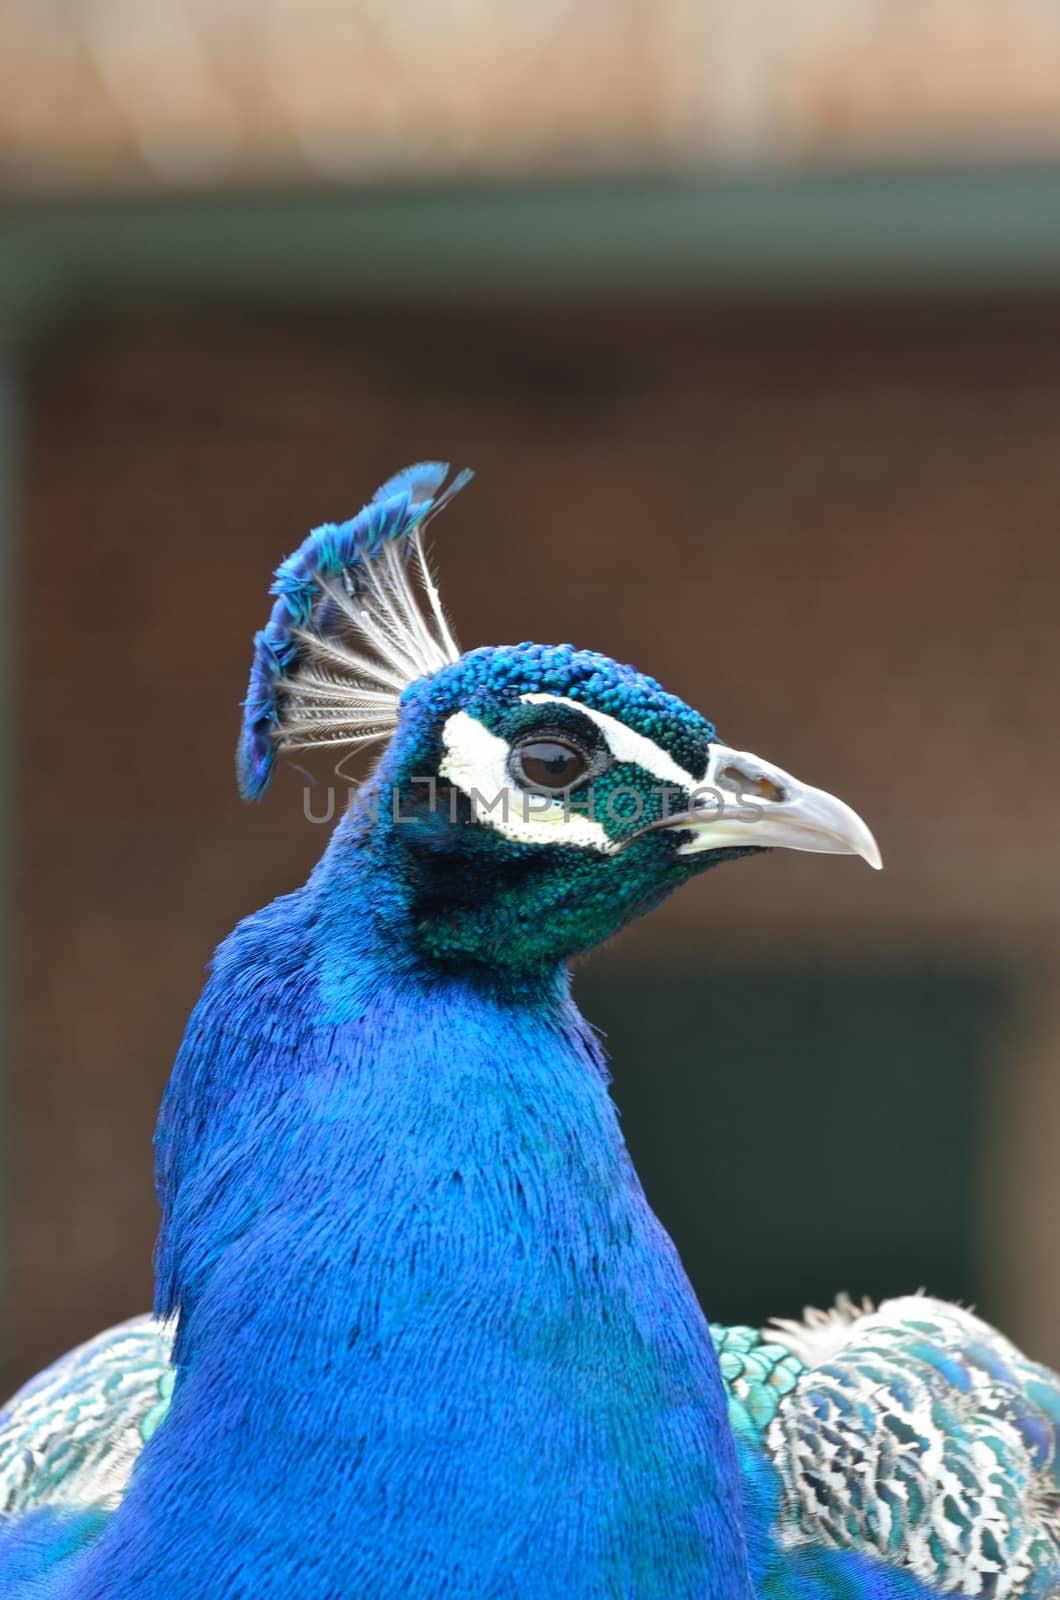 Head of blue peacock